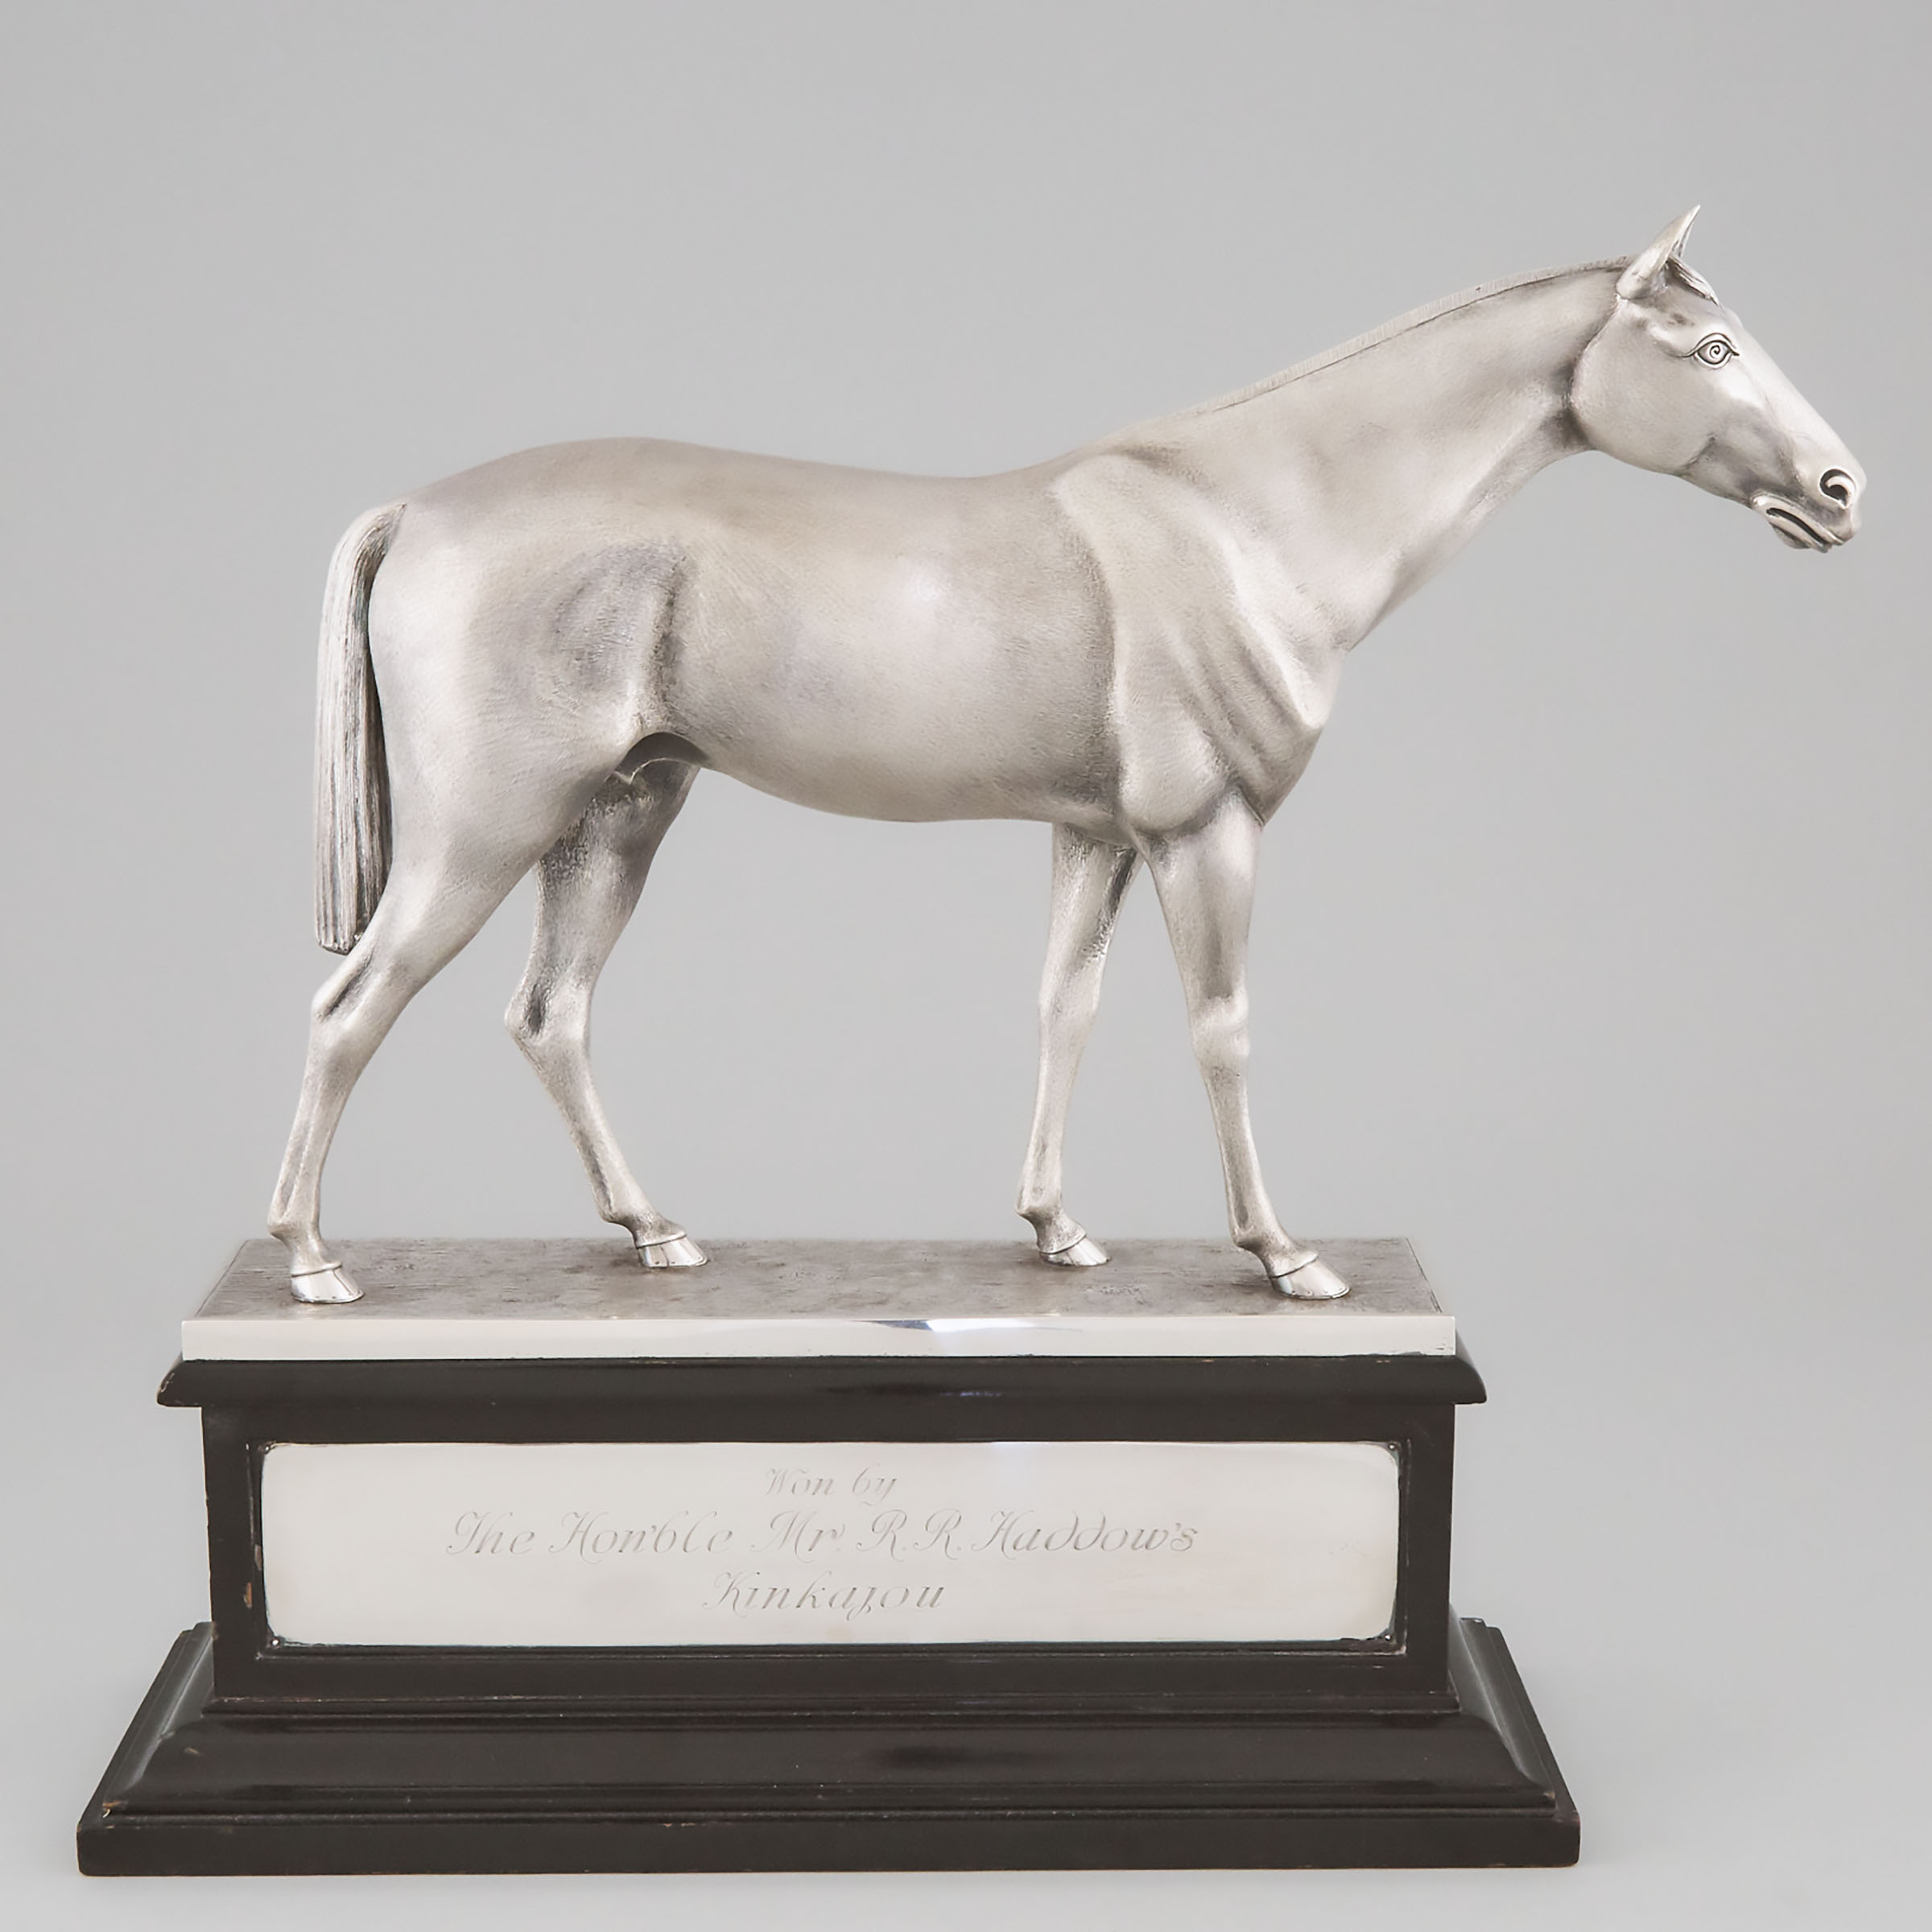 Indian Silver Racing Trophy Modelled as a Horse, Hamilton & Co., Calcutta, c.1940